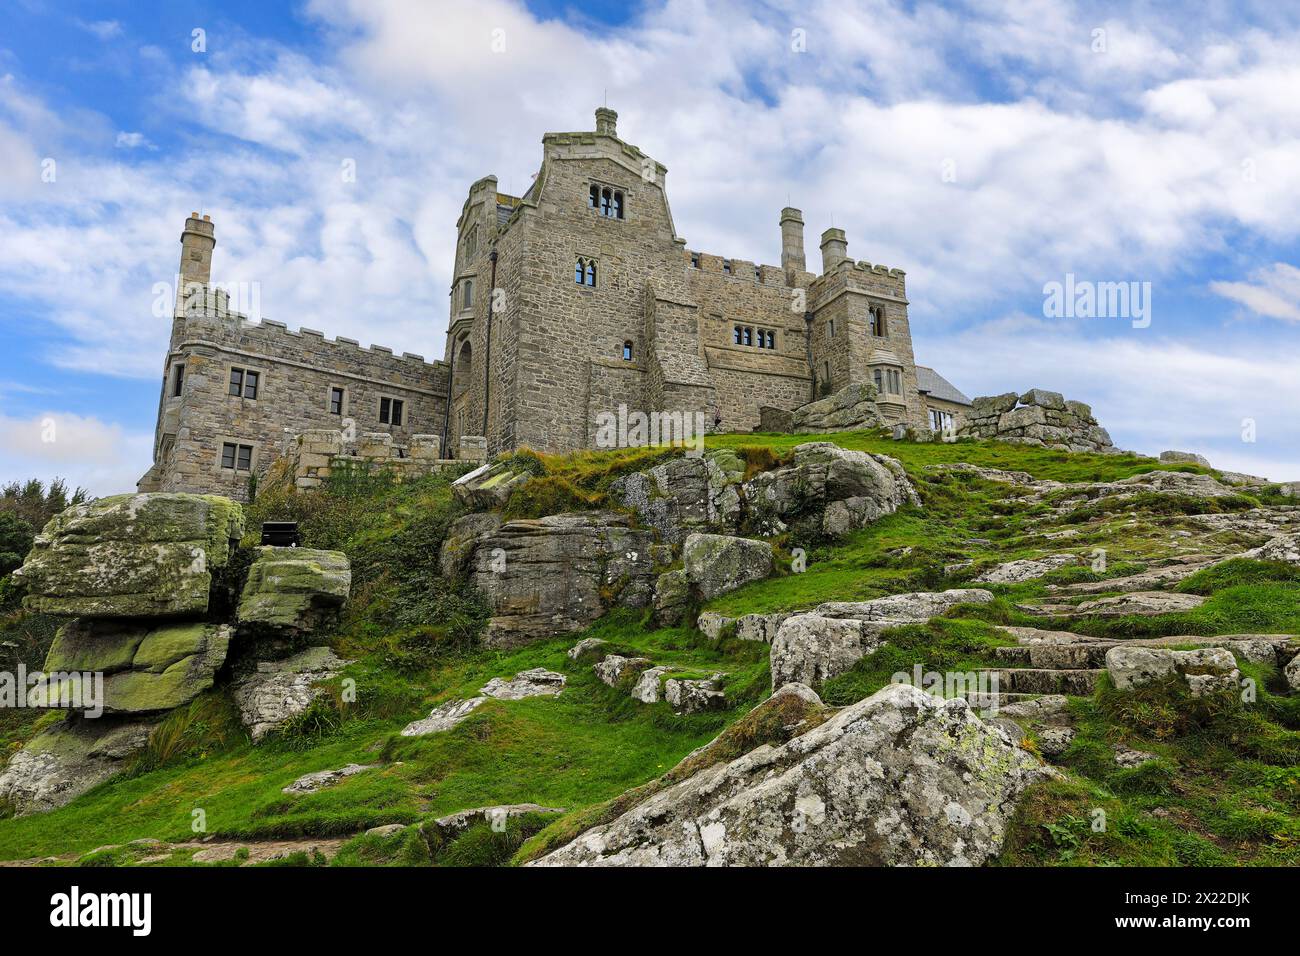 St Michael's Mount castle, on a tidal island in Mount's Bay, Marazion, Penzance, Cornwall, England, United Kingdom Stock Photo